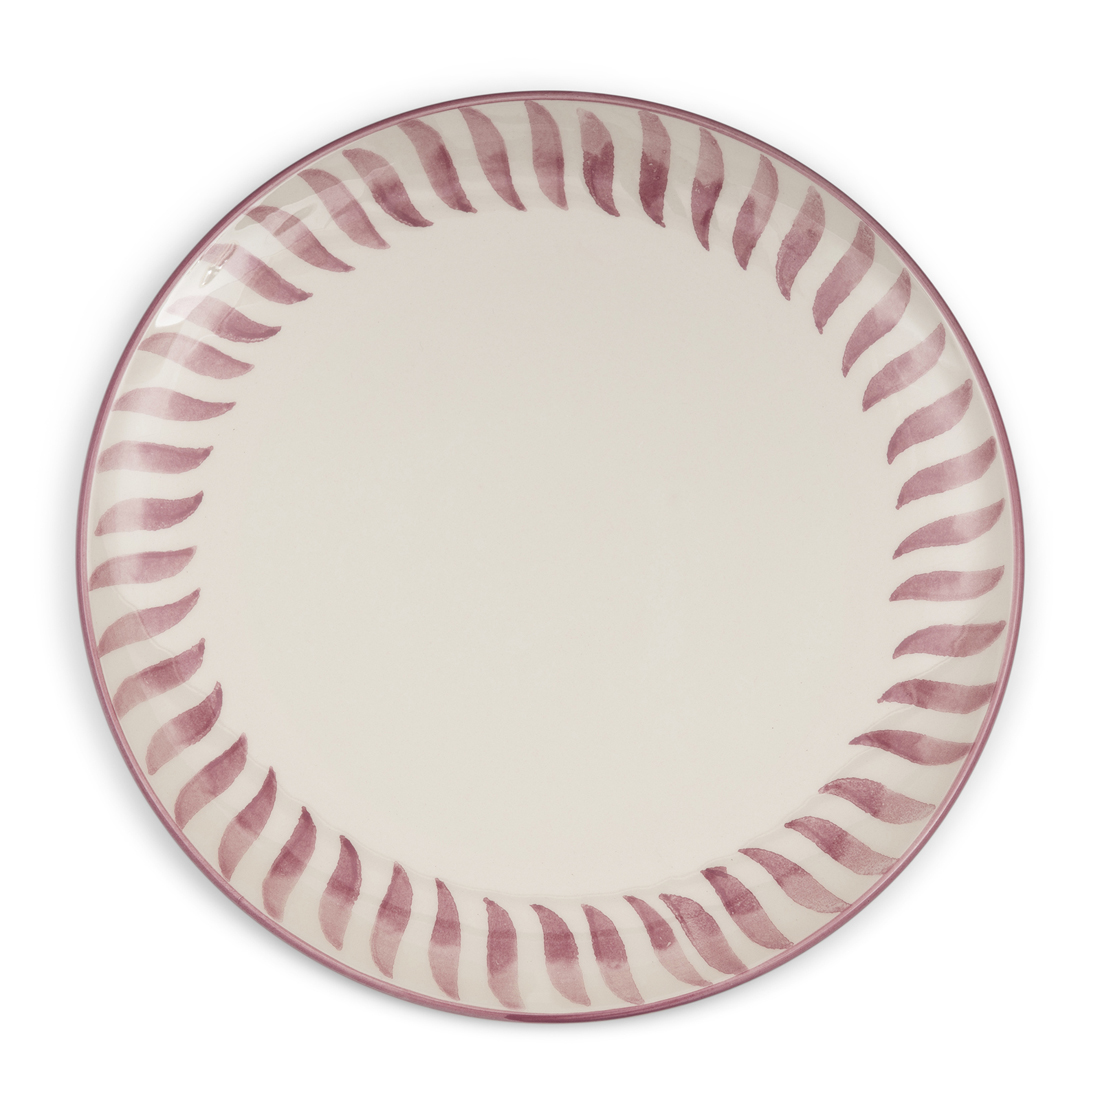 Riviera Maison Dinerbord Roze bord 26 cm gekleurde print - Menton Dinner Plate